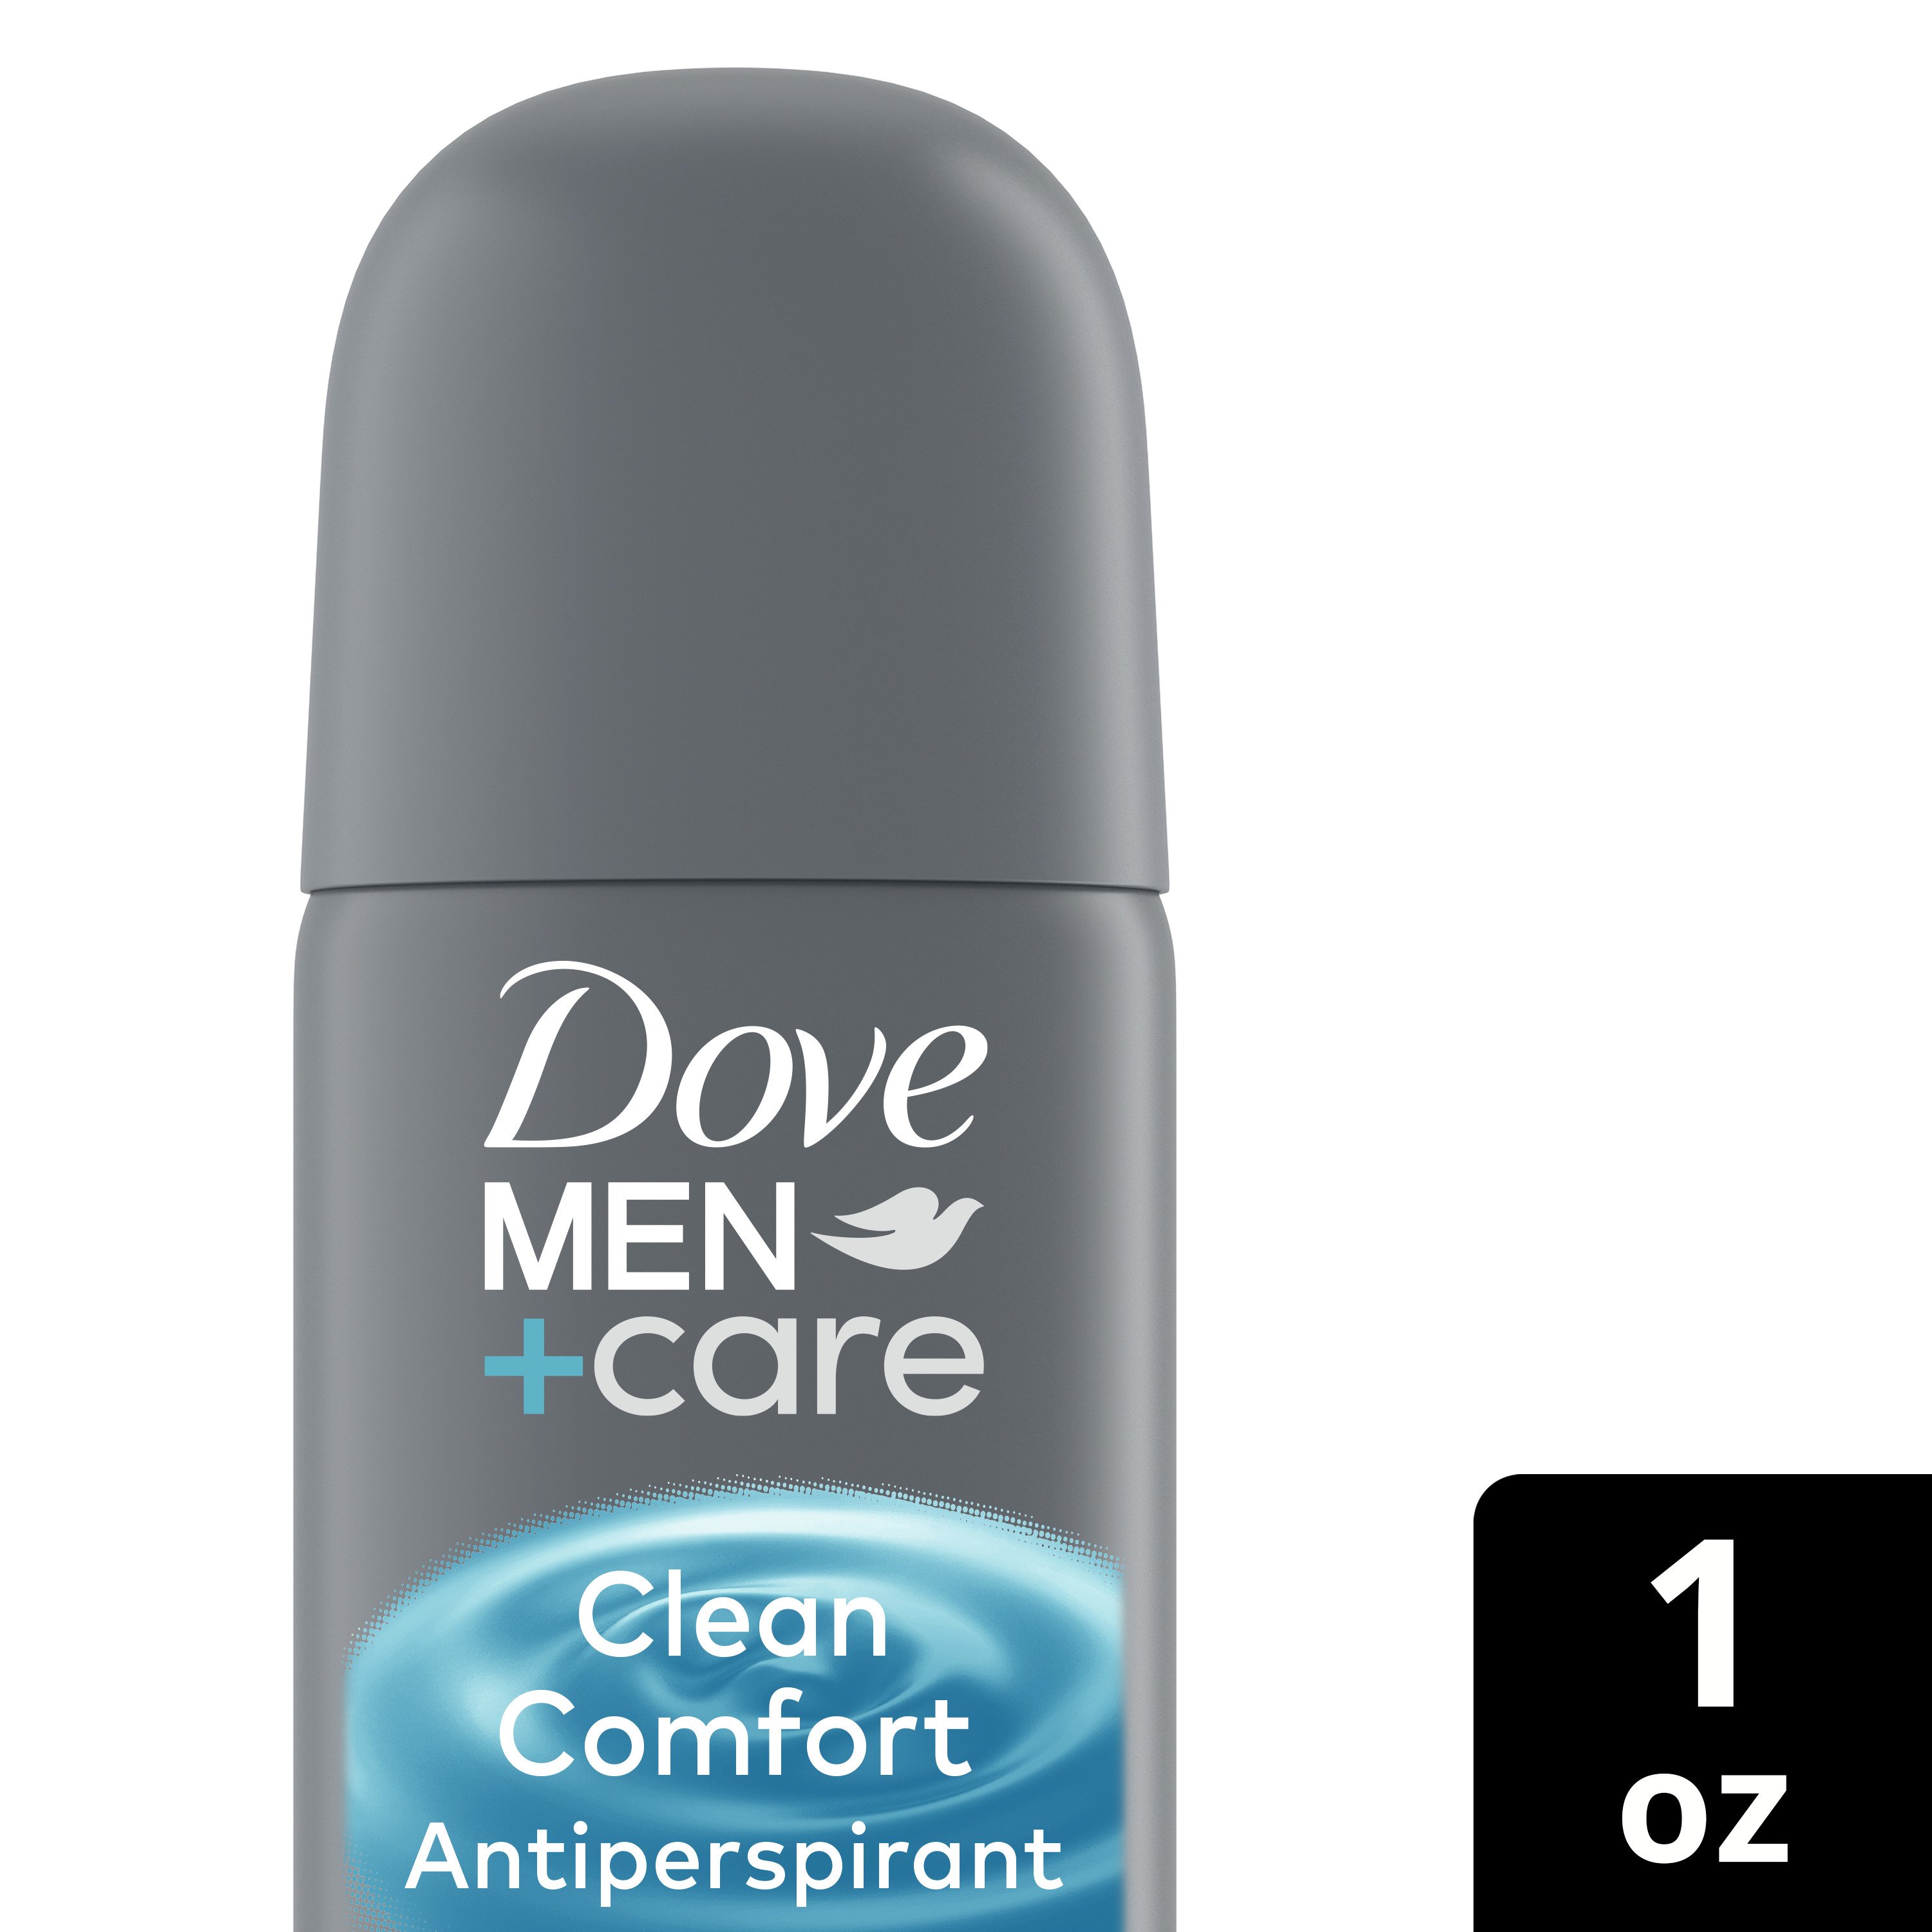 Dove Men+Care Antiperspirant Deodorant Dry Spray - Clean Comfort Shop Deodorant & Antiperspirant at H-E-B